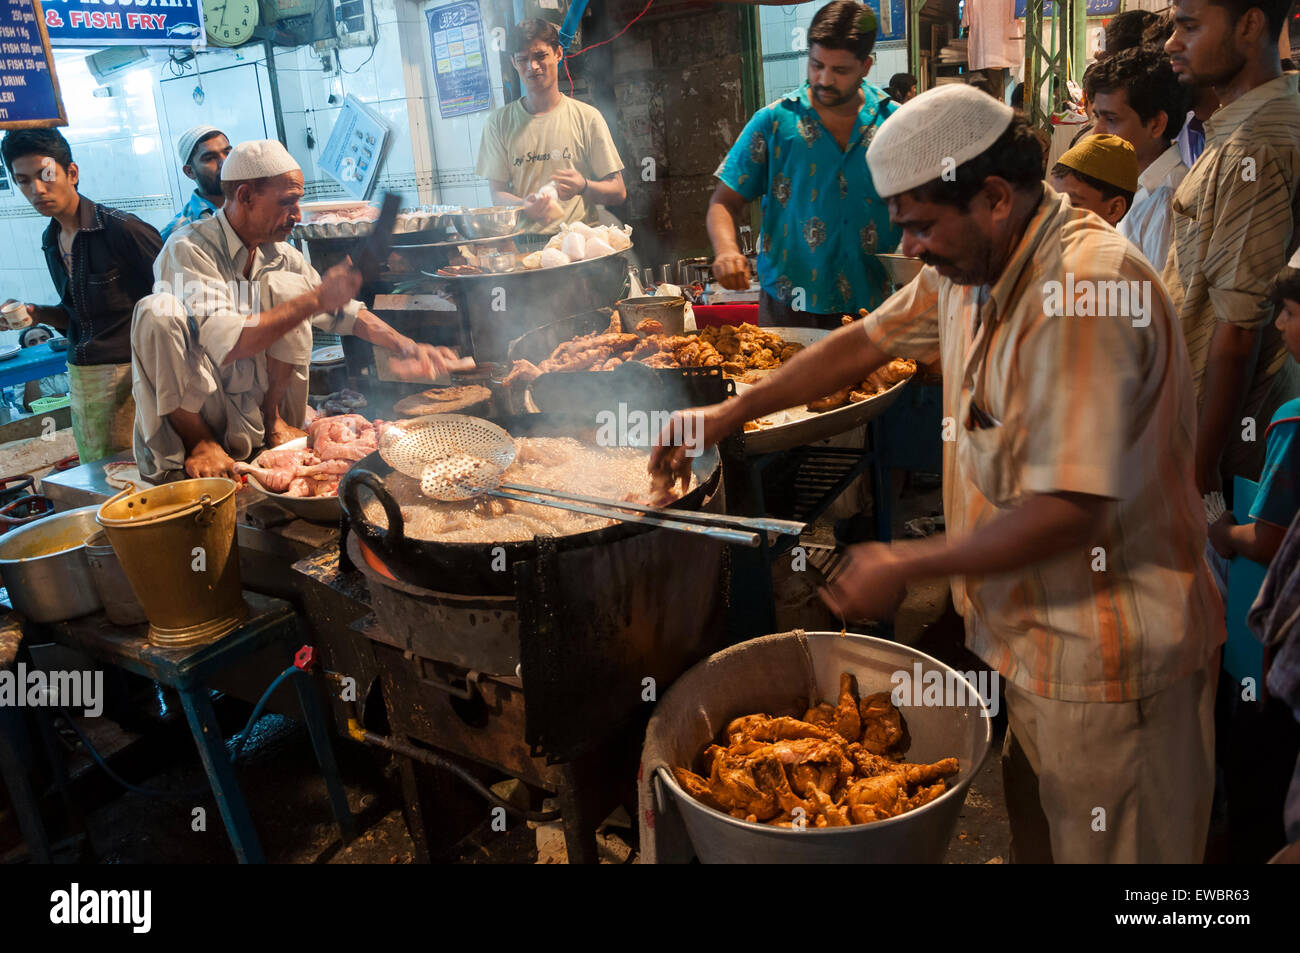 Men cooking in a local restaurant in Chandni Chowk, Old Delhi, India during Ramadan/ Ramzan. Stock Photo